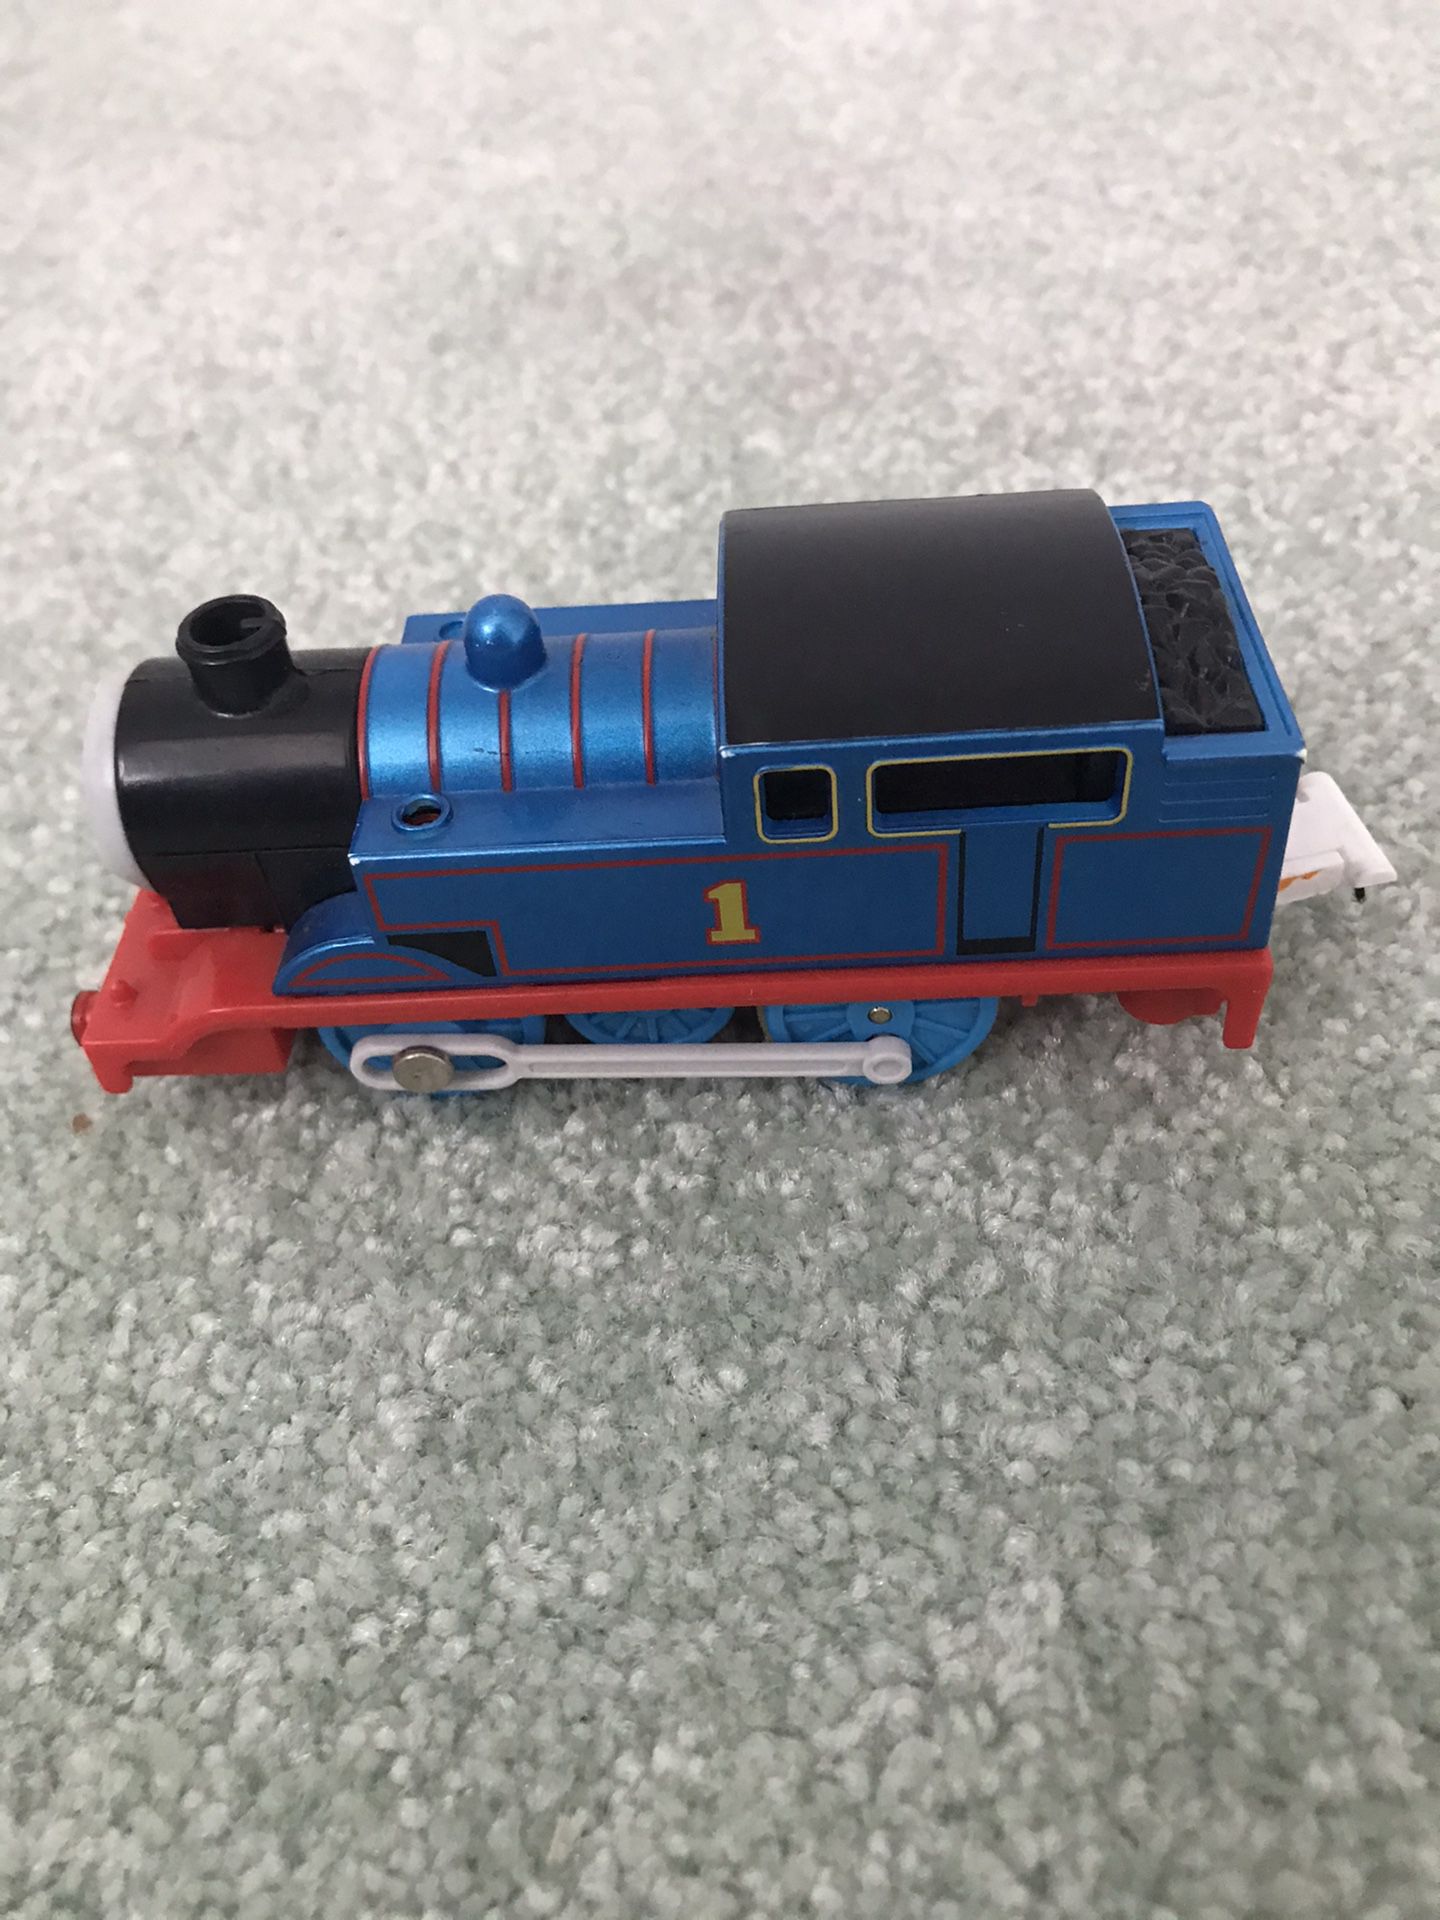 Thomas and friends “Thomas” plastic train engine